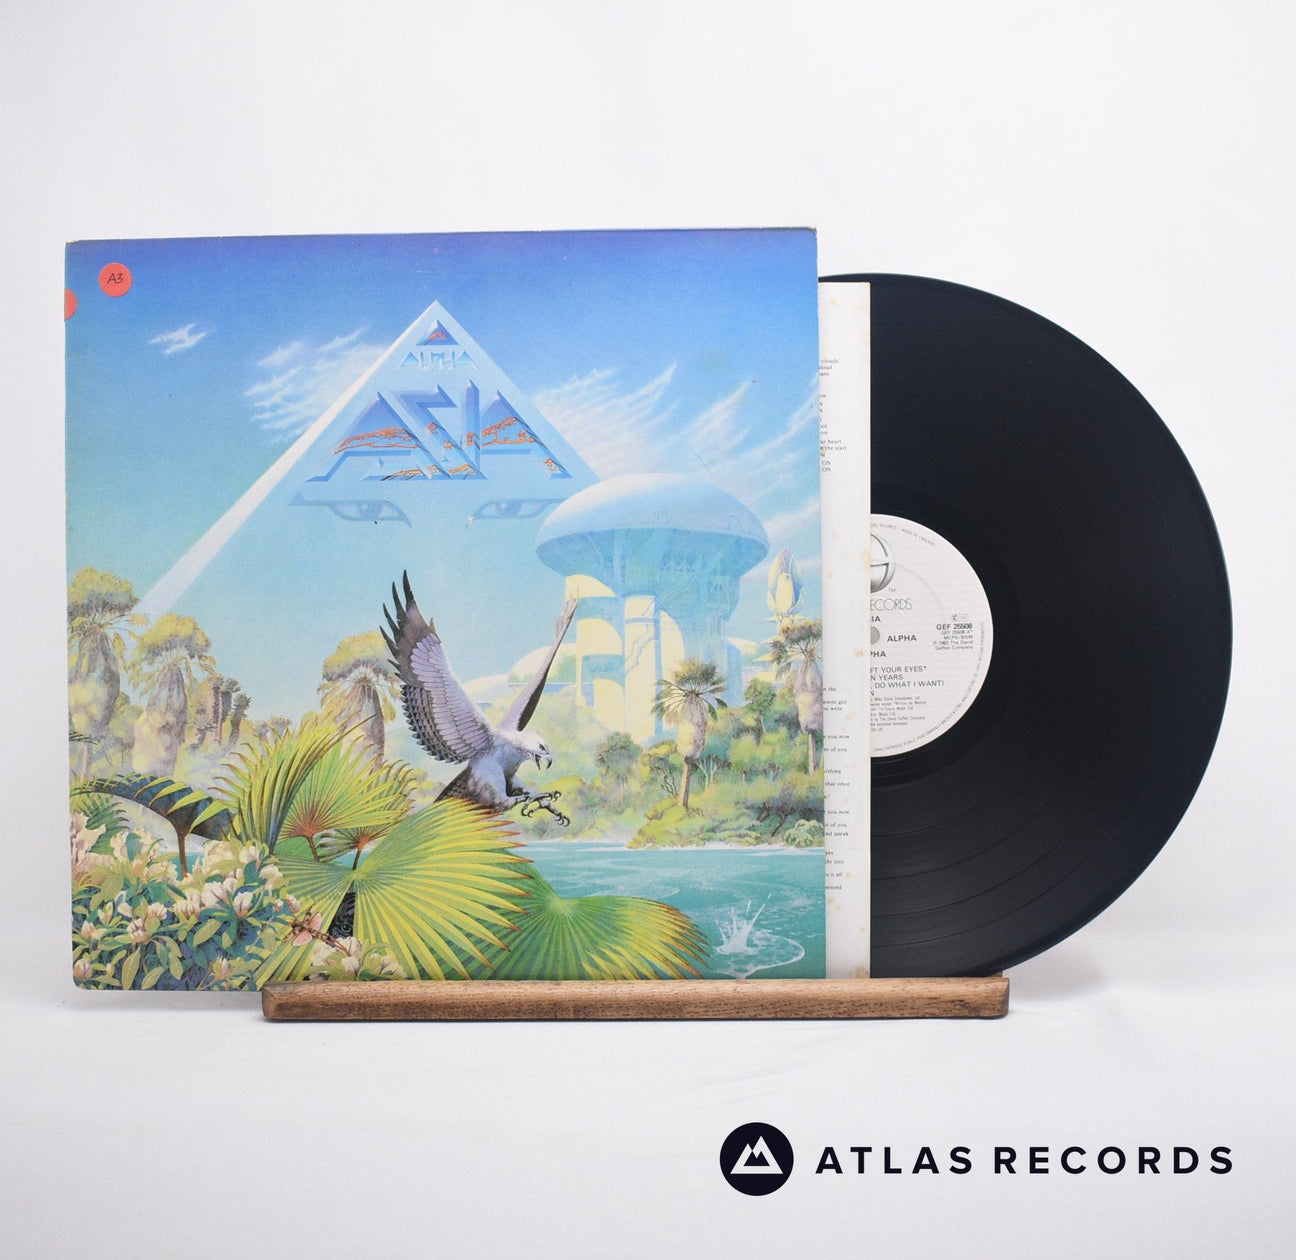 Asia Alpha LP Vinyl Record - Front Cover & Record